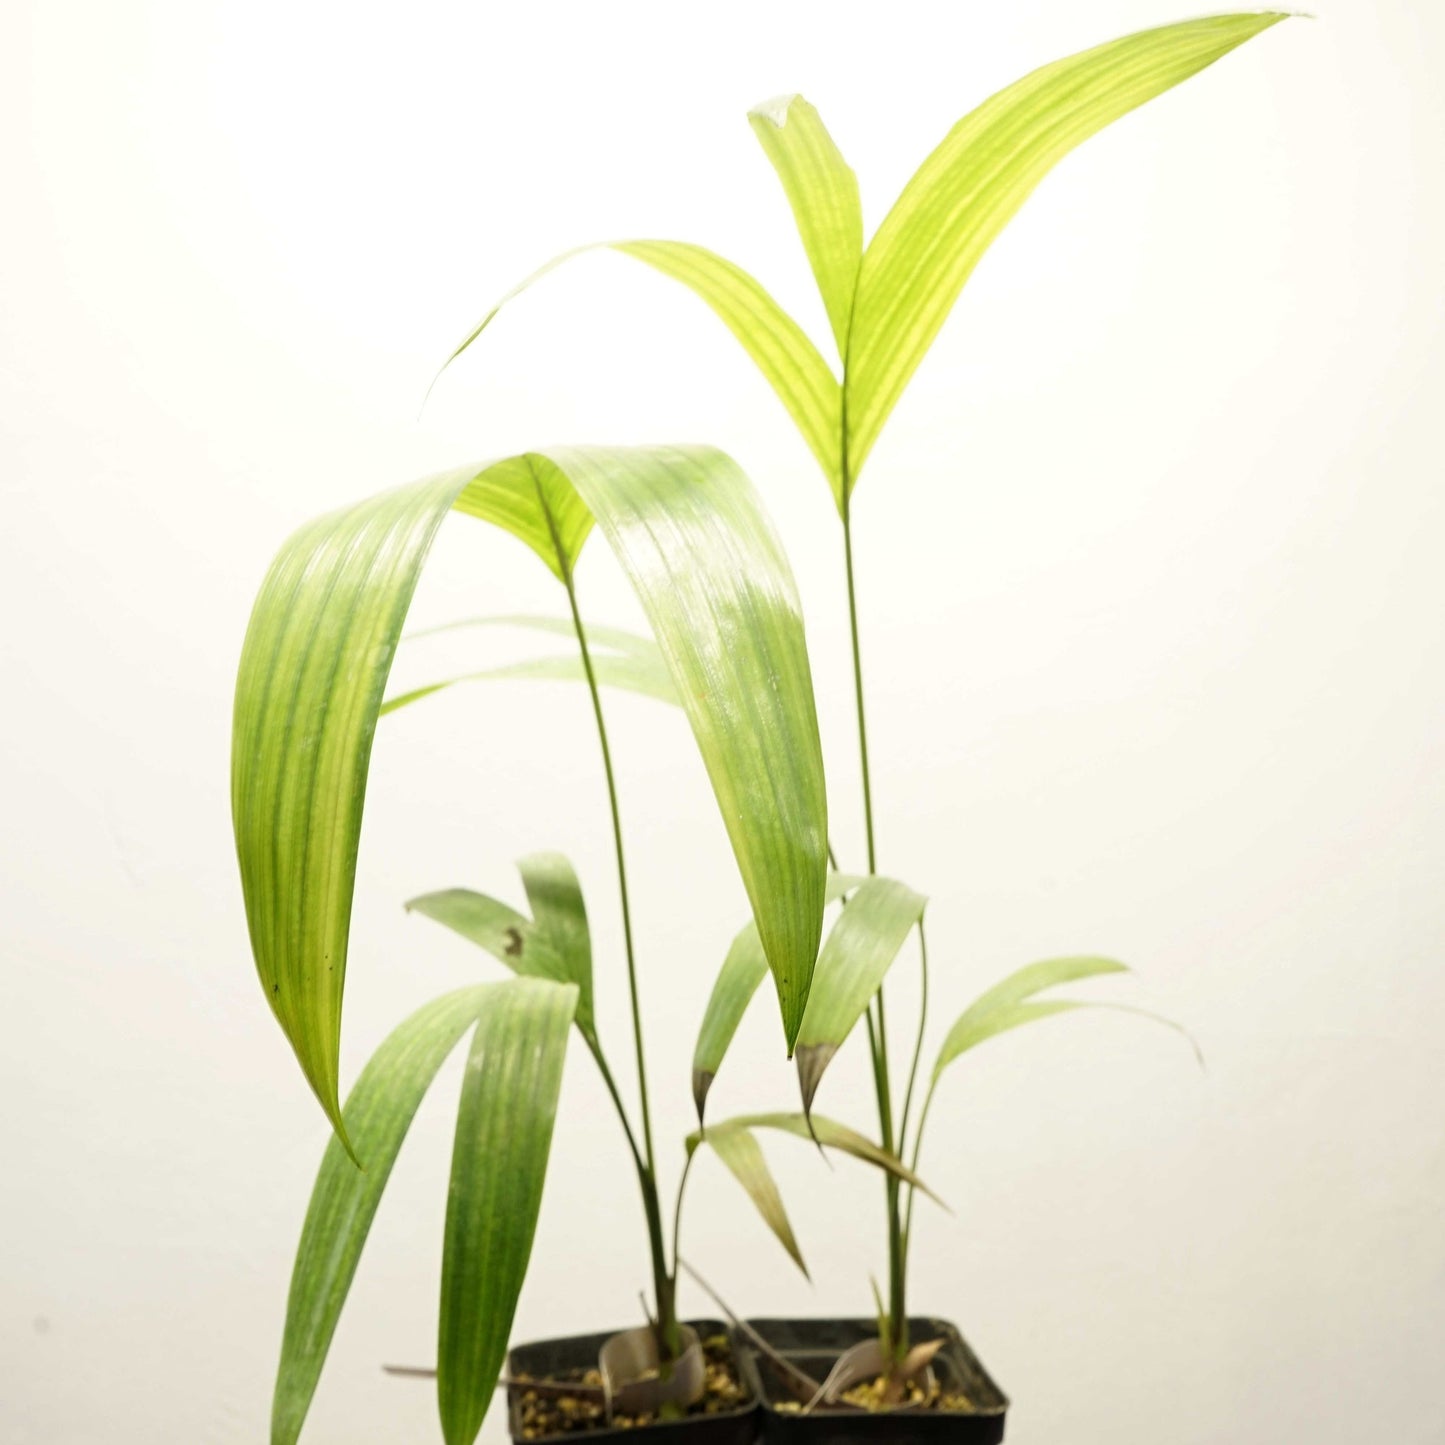 Rocky River Palme - Archontophoenix tuckeri 20- 30 cm Pflanze